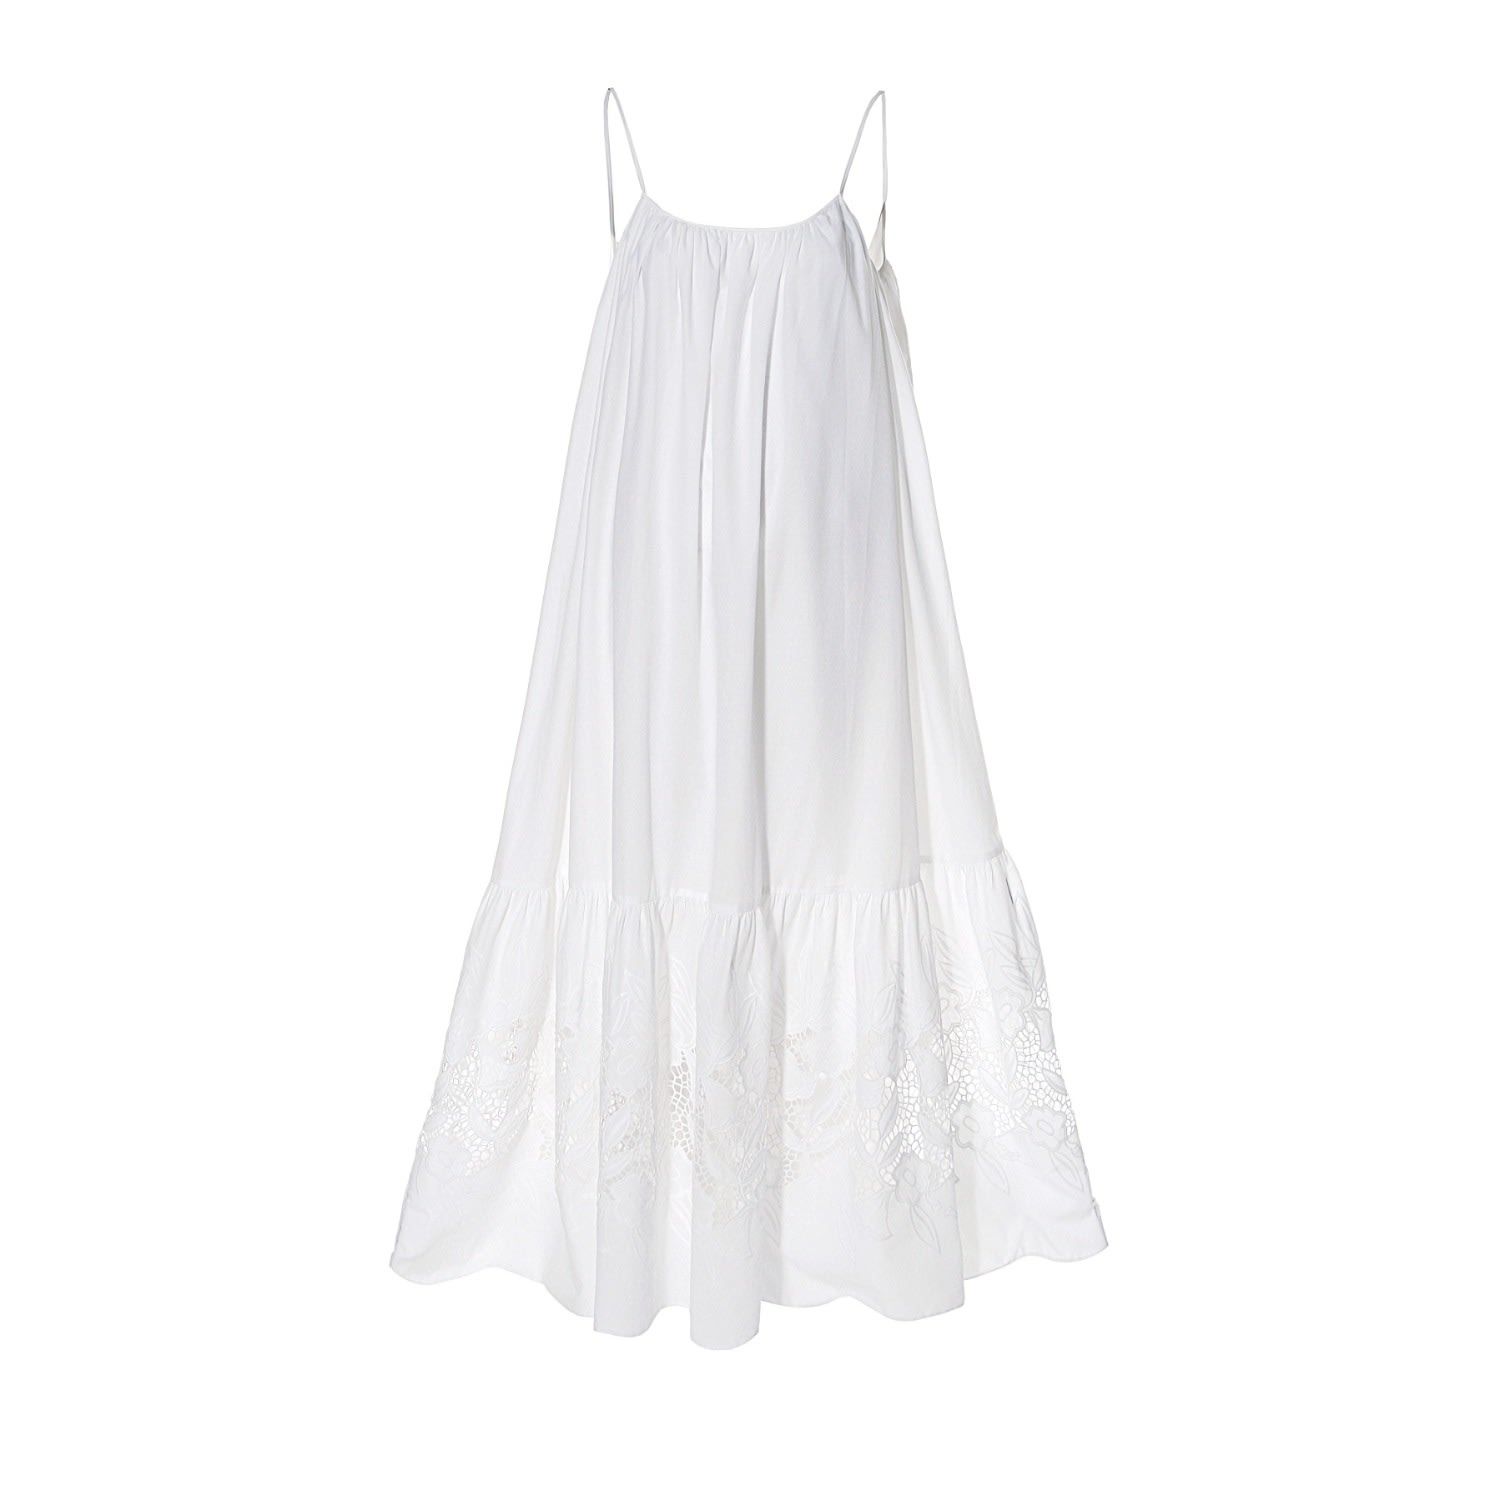 Aggi Women's Lea Floral White Dress